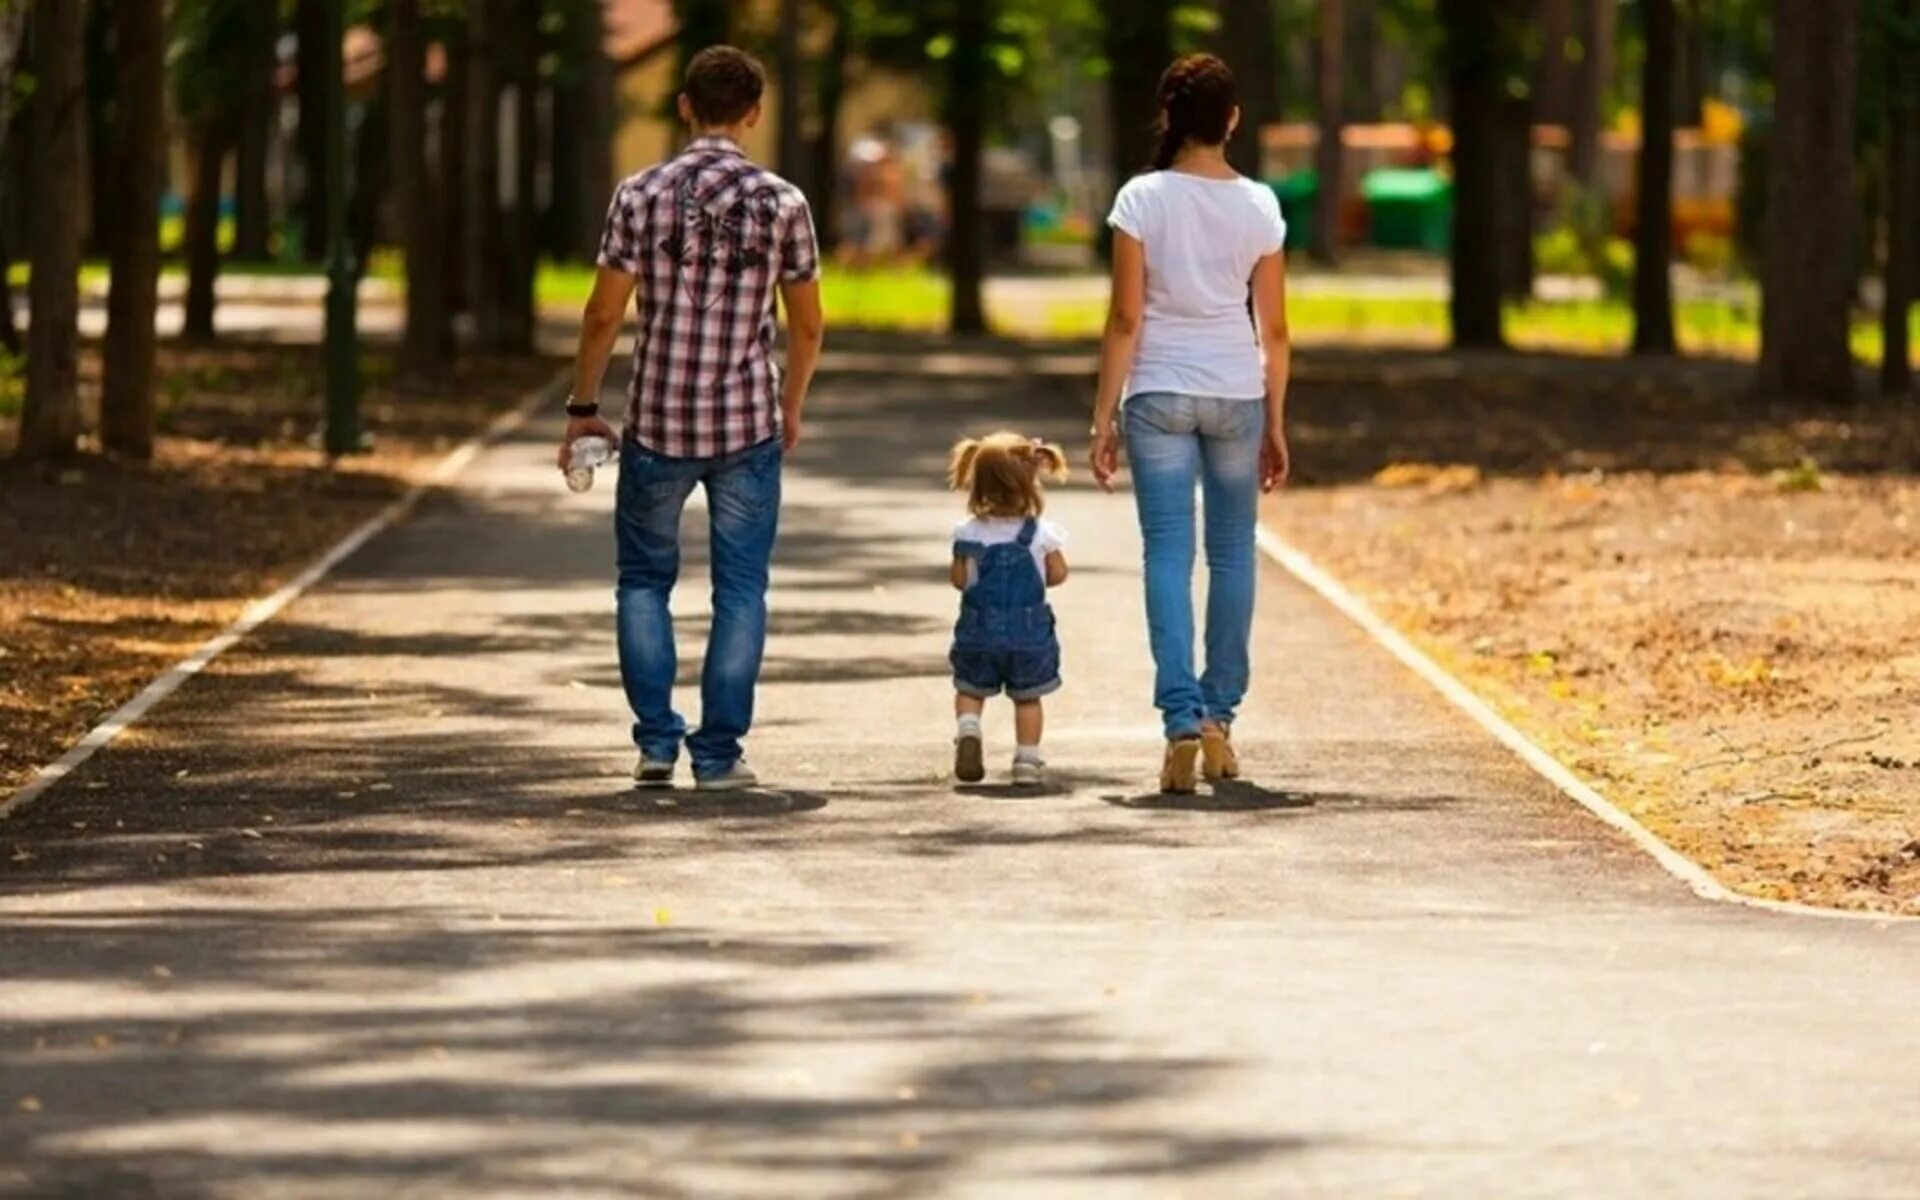 Прогулка в парке. Прогулка в парке с детьми. Люди в парке с детьми. Семья на прогулке.